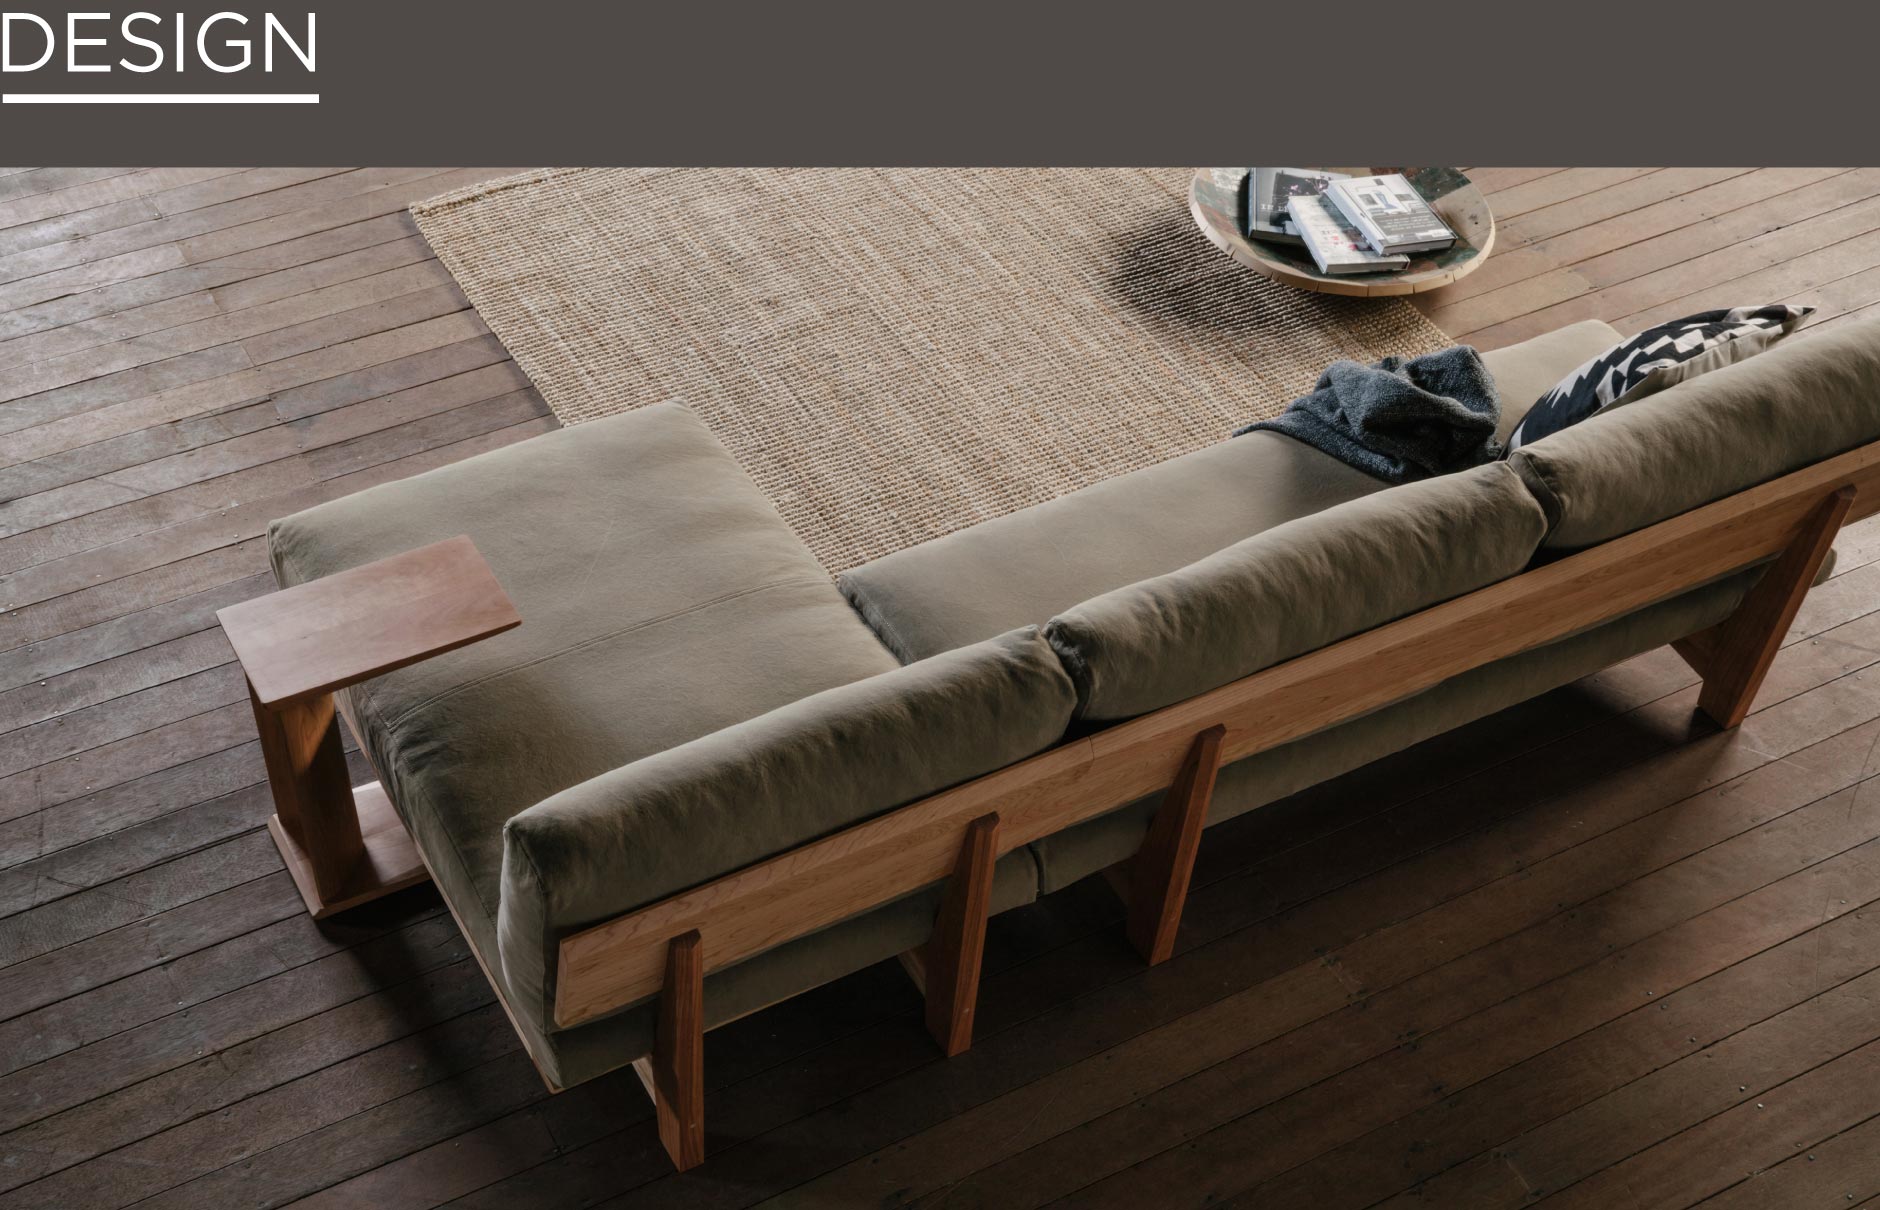 SOLID横浜の家具の中でも大人気のカウチソファ。シャープなフレームに分厚いクッションでアームレスでも高級感が生まれます。